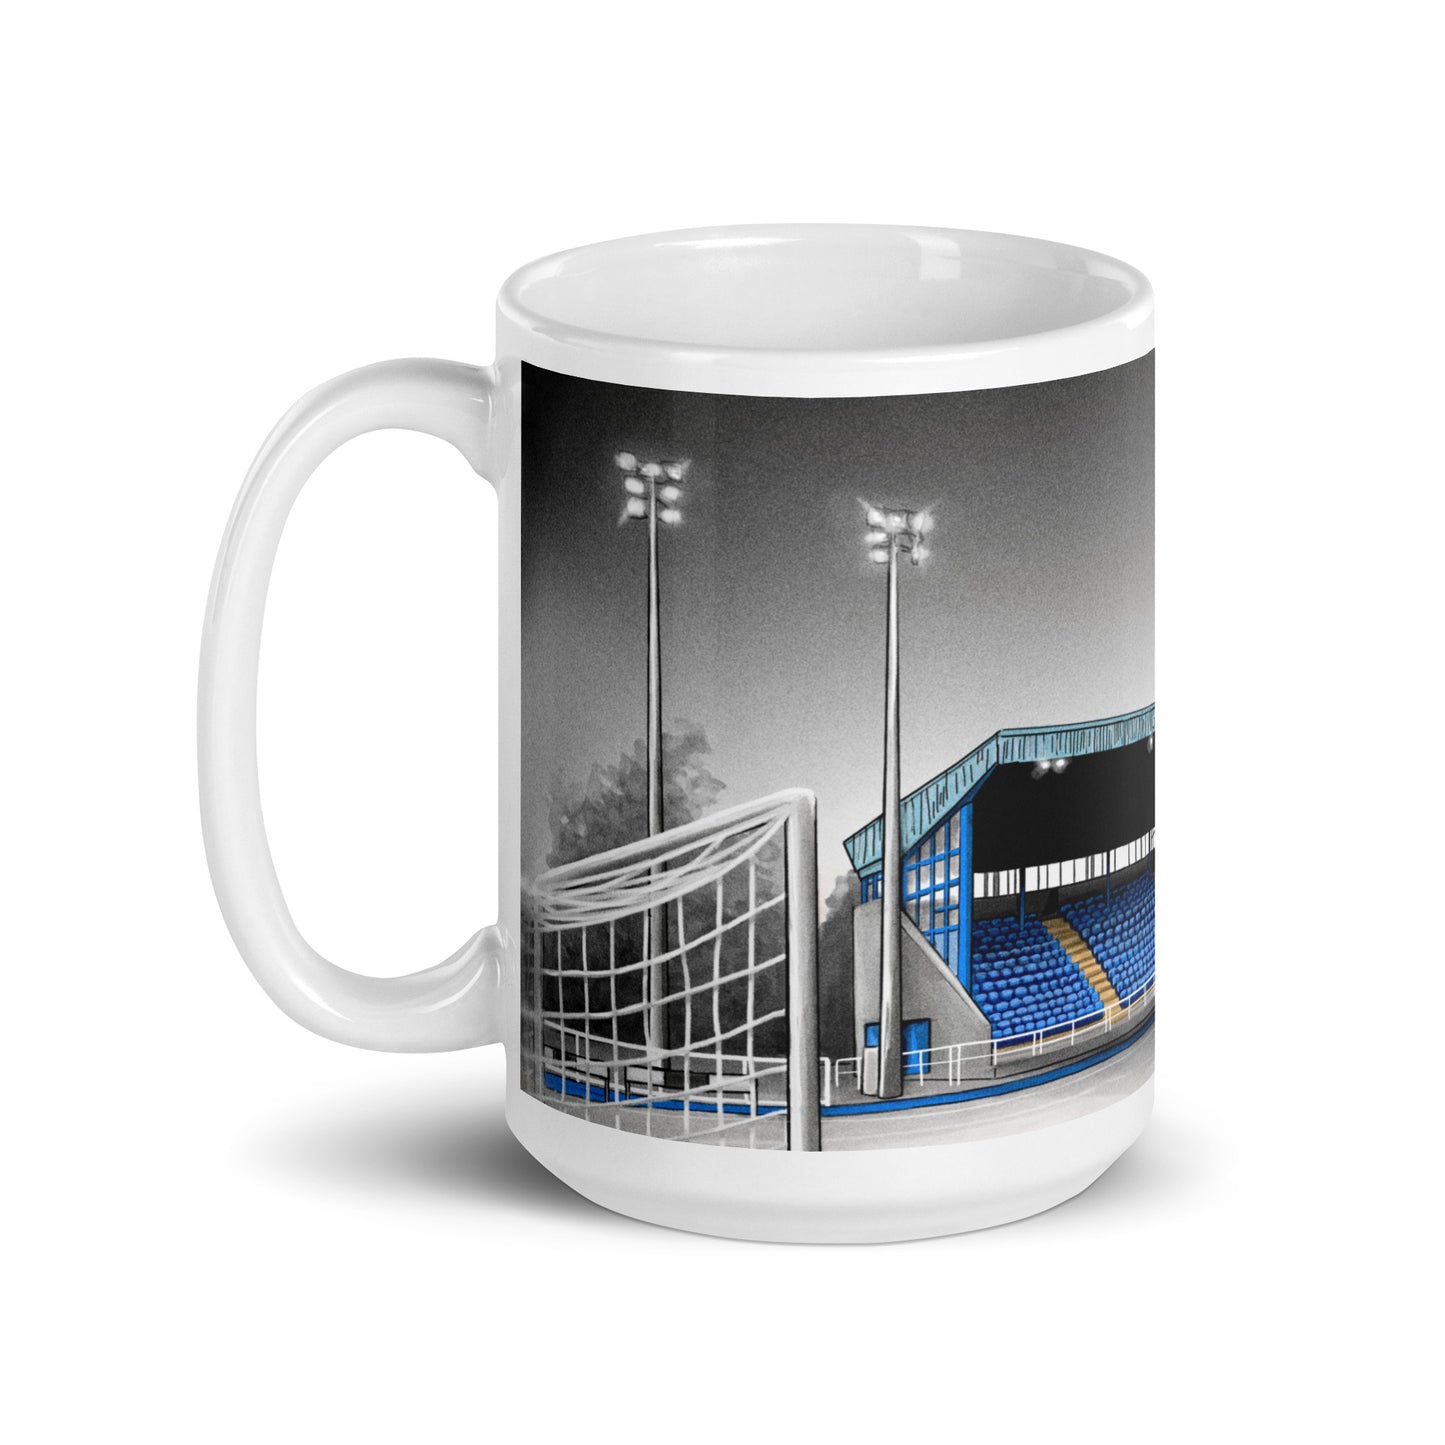 The RSC Waterford FC glossy mug